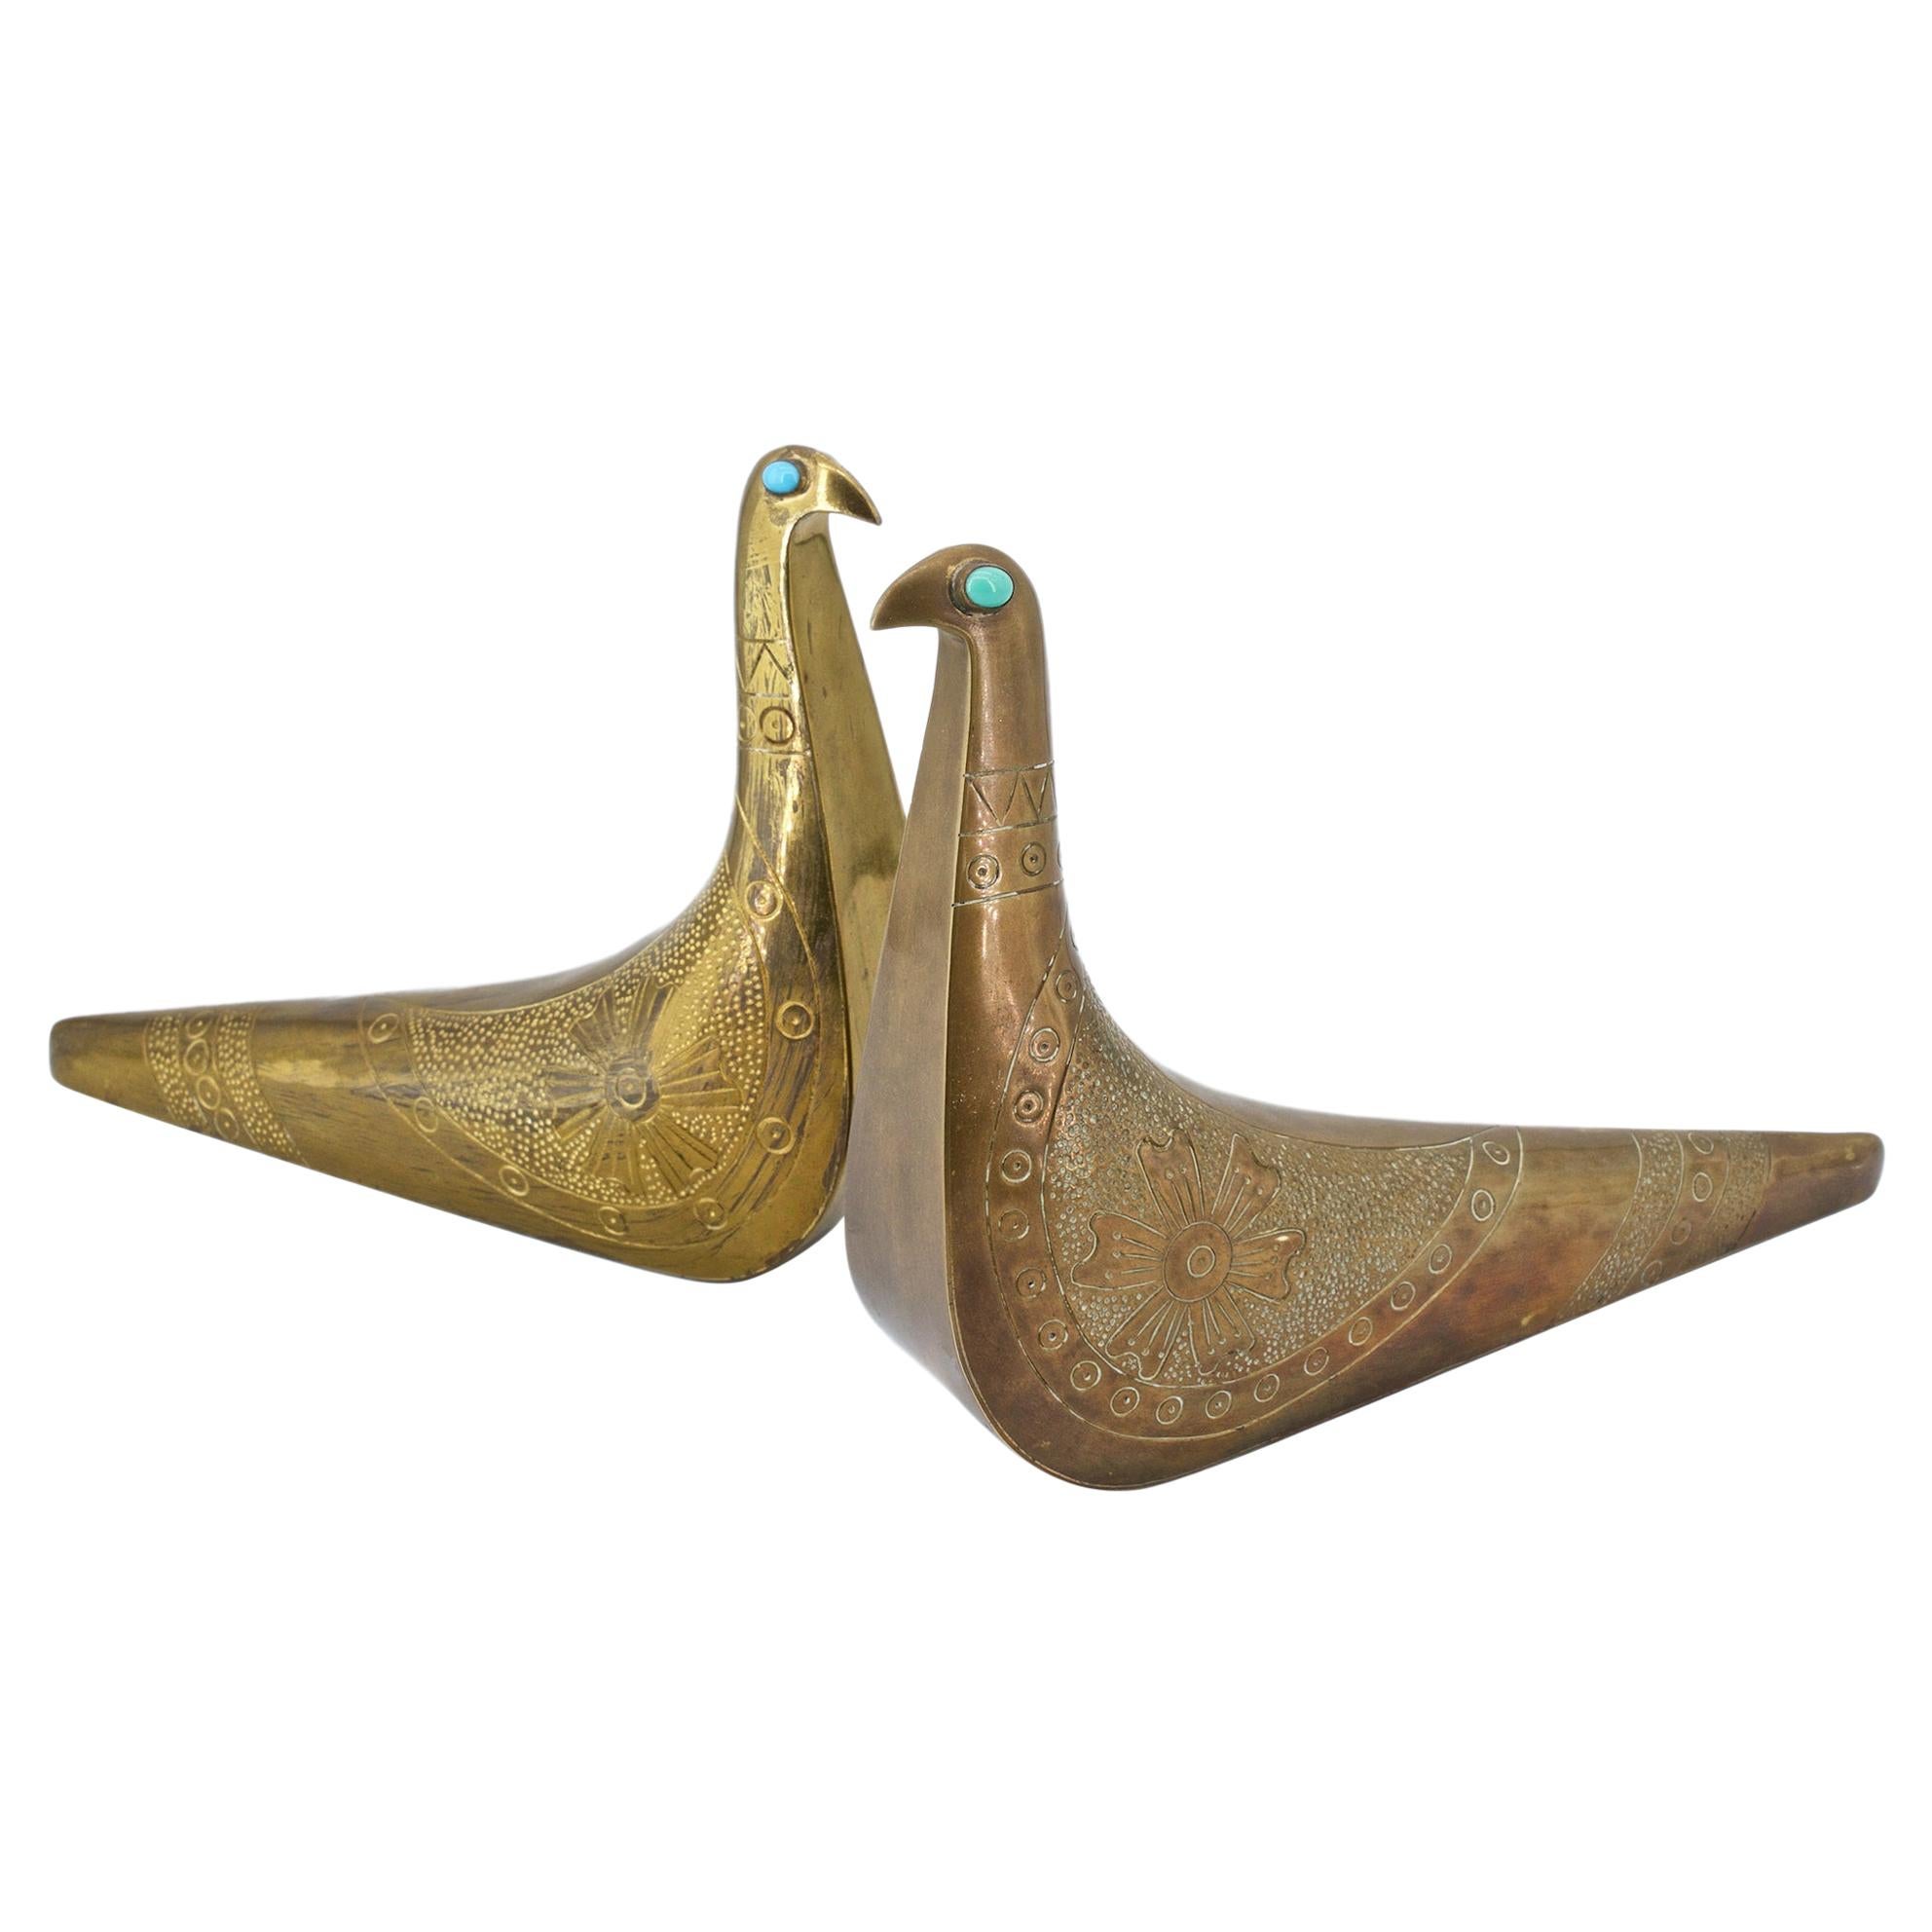 1960er Jahre Artisan Brass Metal Art Türkis Edelstein Rebhuhn Taube Vogel Skulpturen